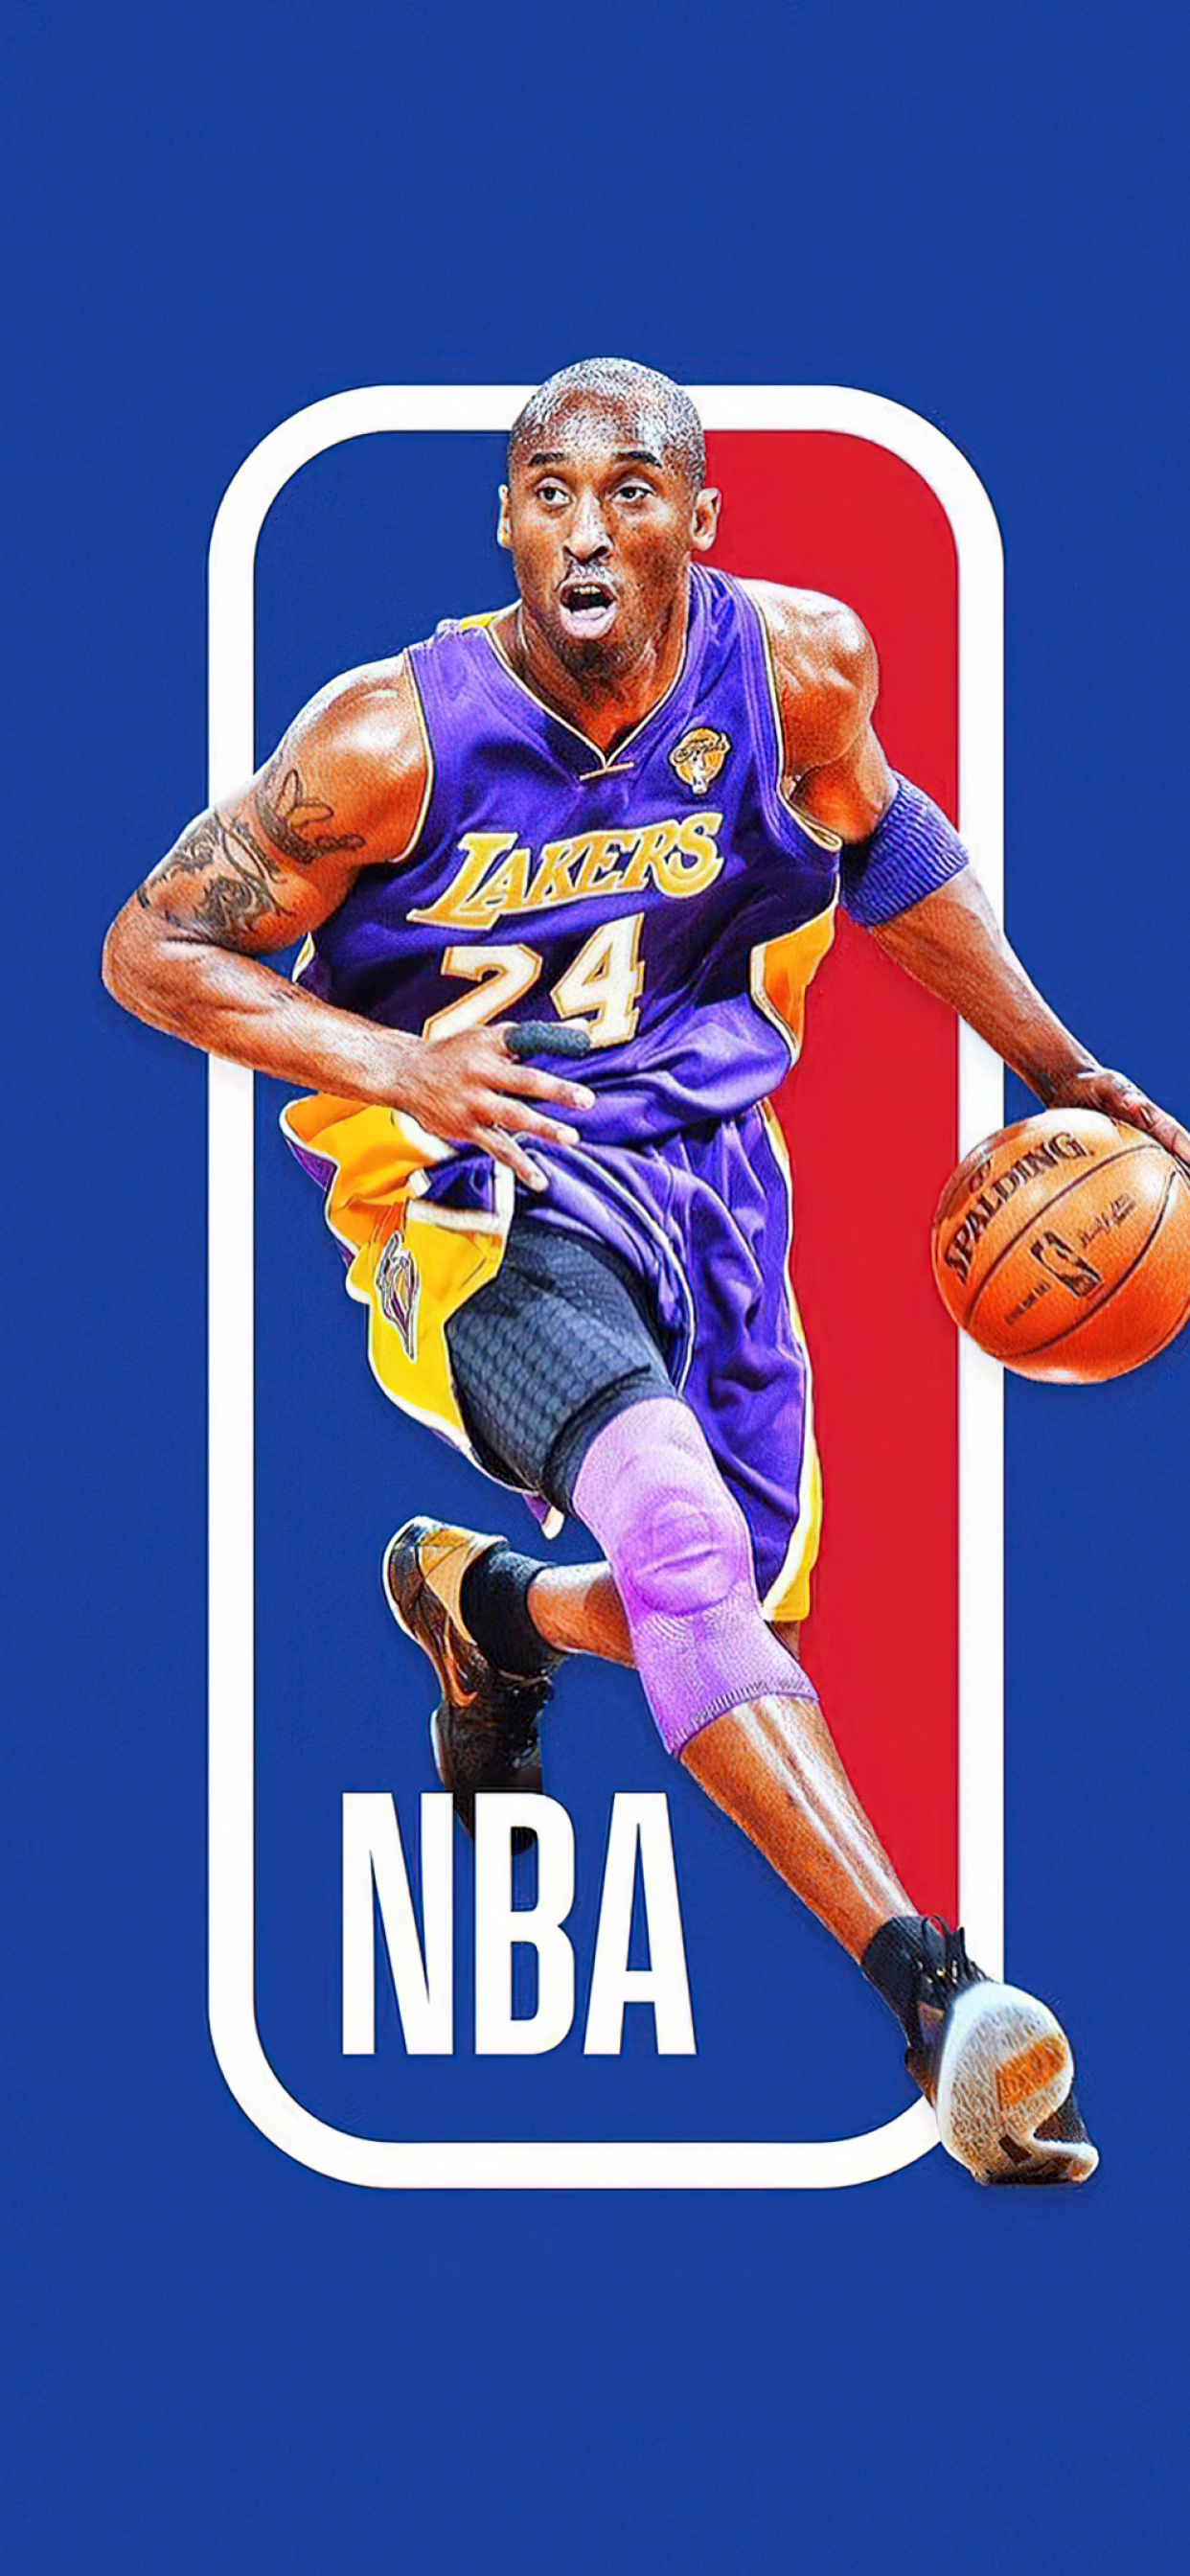 Kobe Bryant Awesome Wallpaper  Basketball Wallpapers at